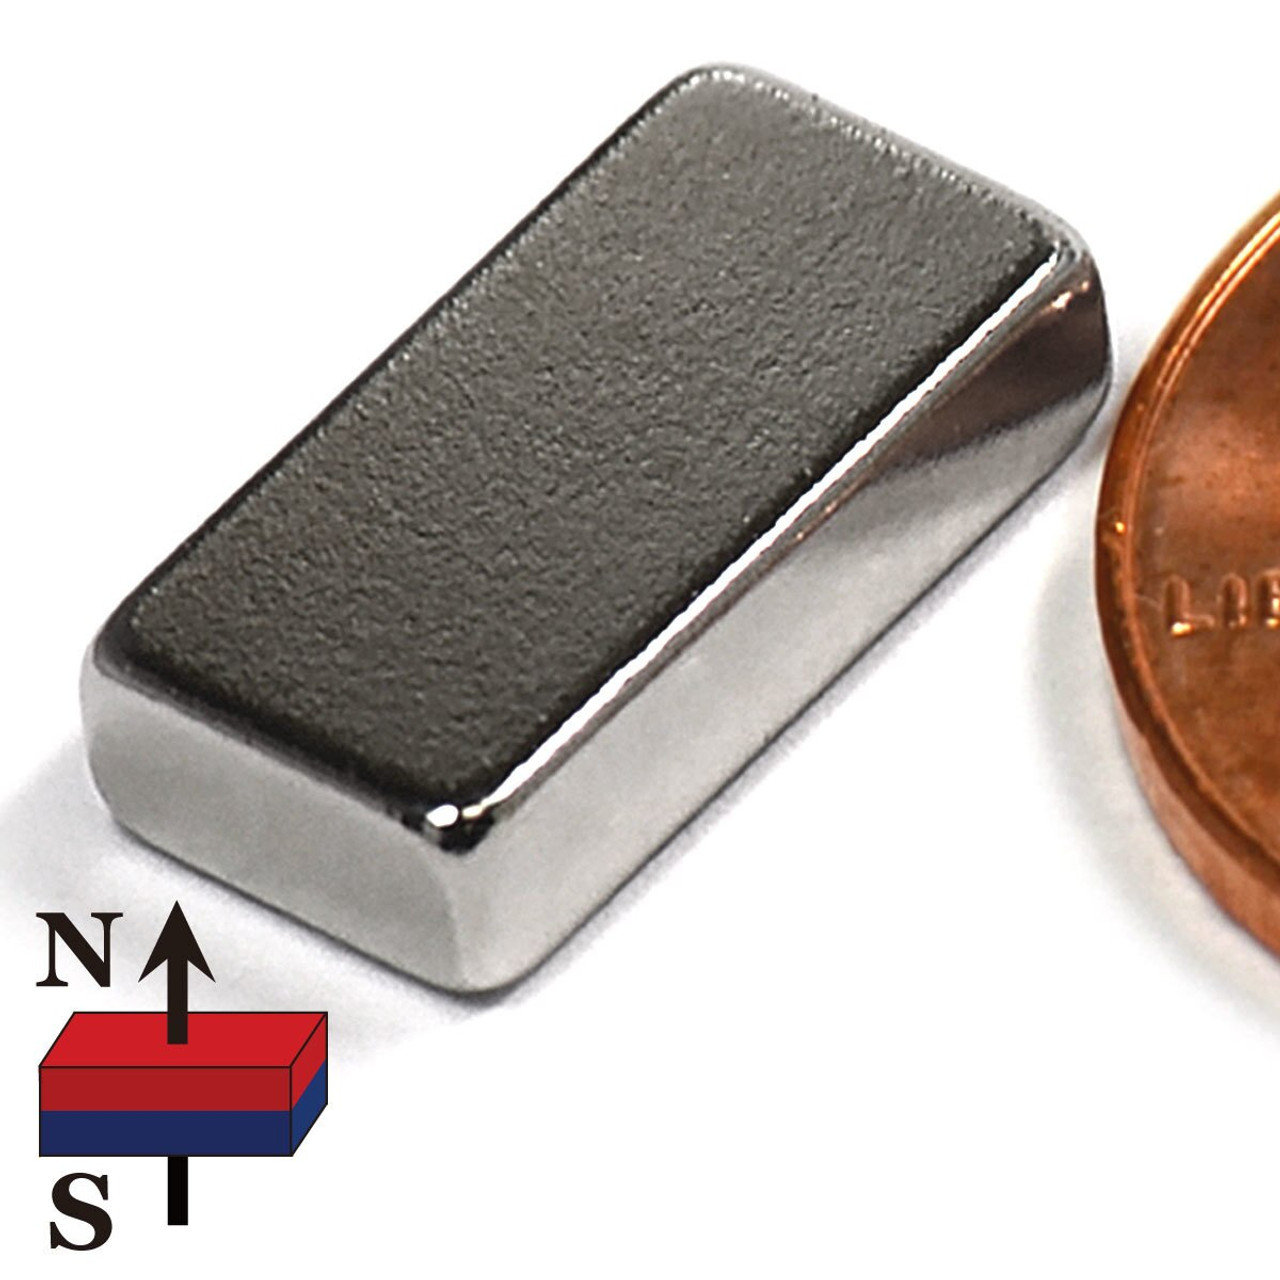 20 N45 Neodymium 1/2 x 1/2 x 1/8 inches Block/Bar Magnet. 